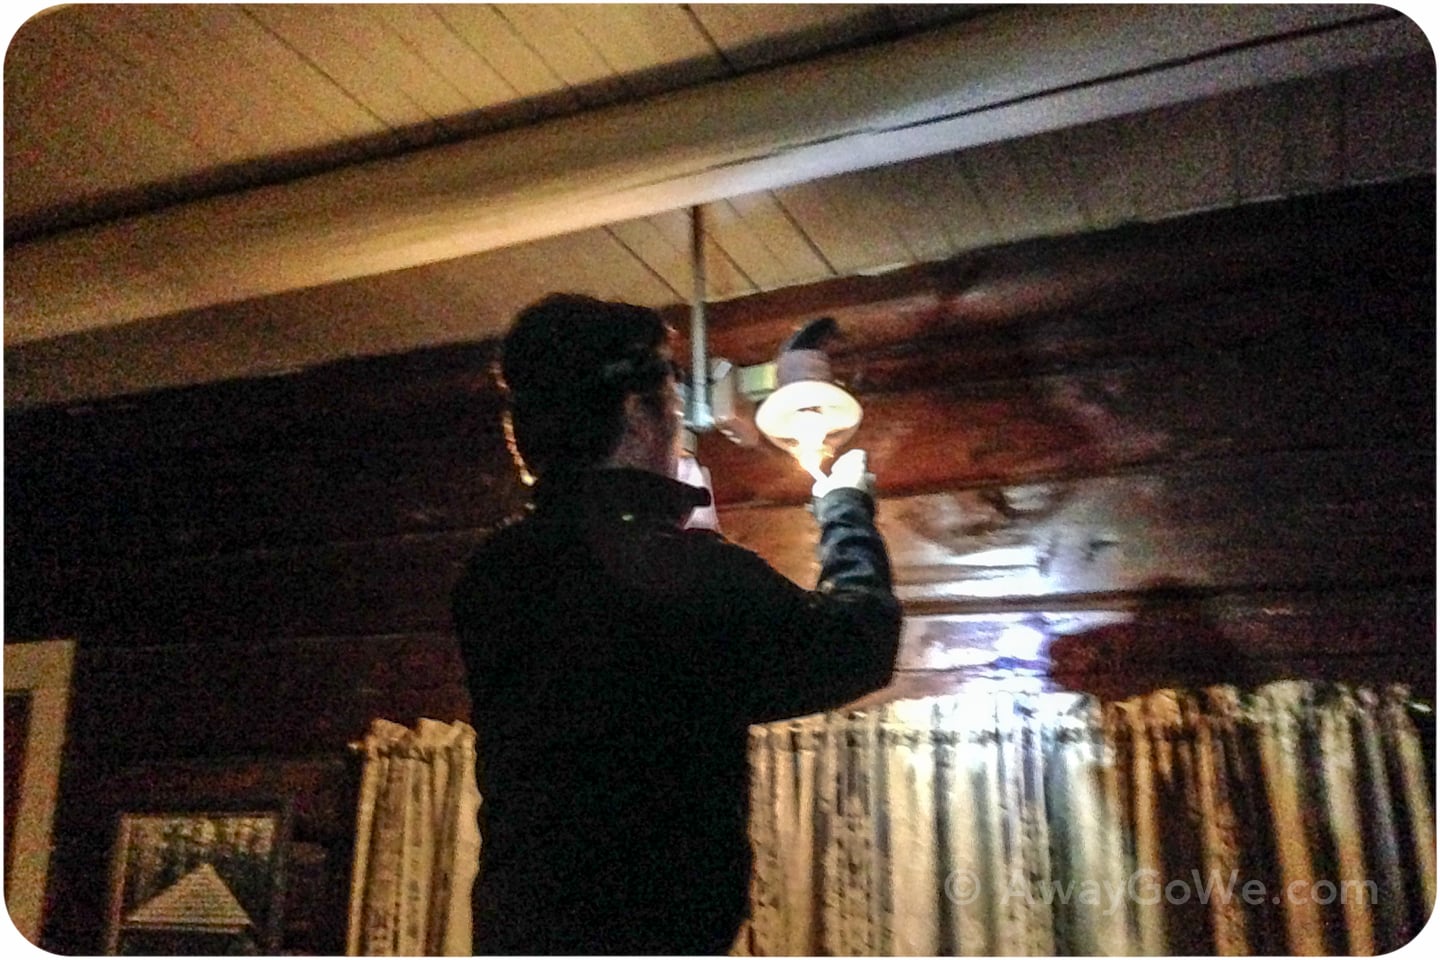 interrorem cabin olympic national park propane lamps